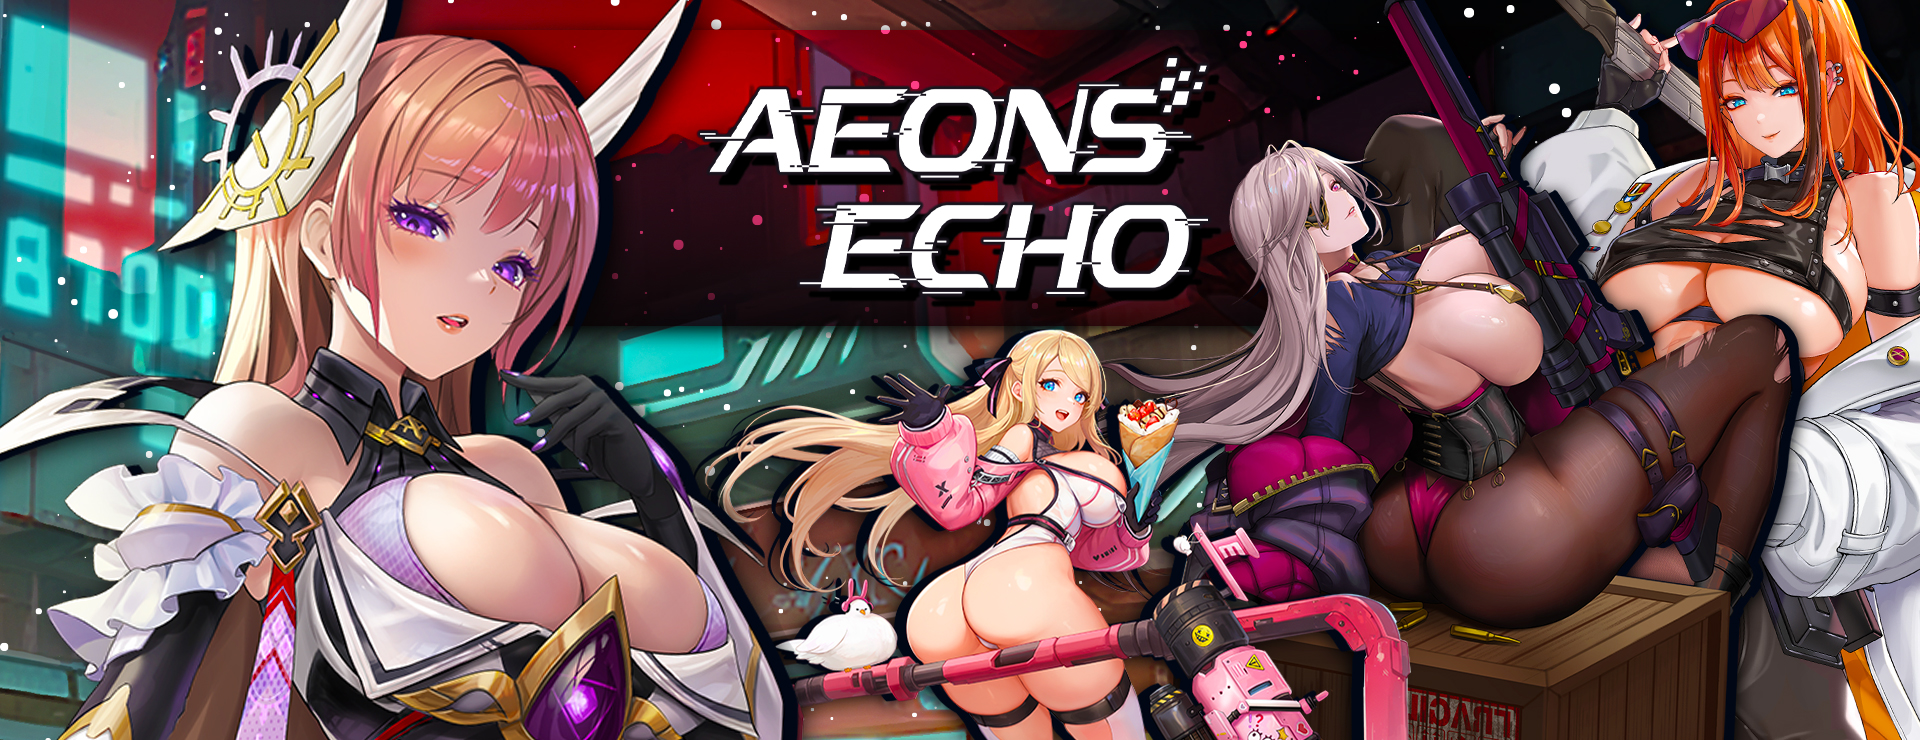 Aeons Echo - Casual Game